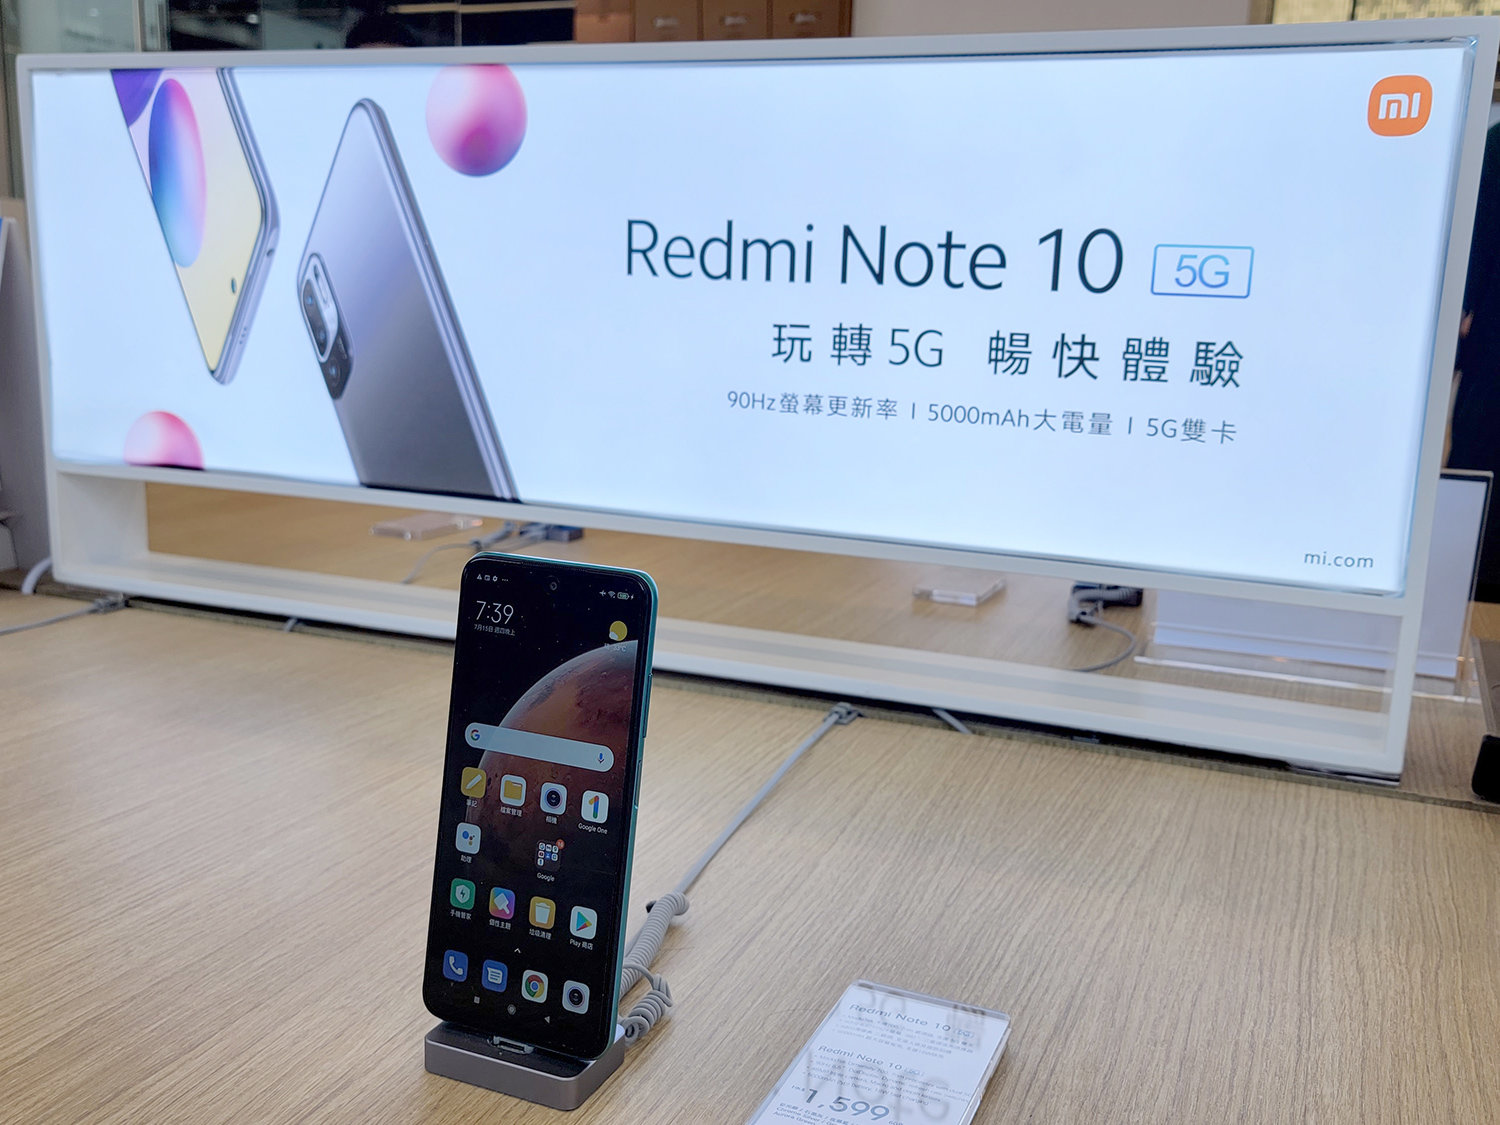 Xiaomi「Redmi Note 10 JE」の海外向けベースモデルは激安5Gスマホ